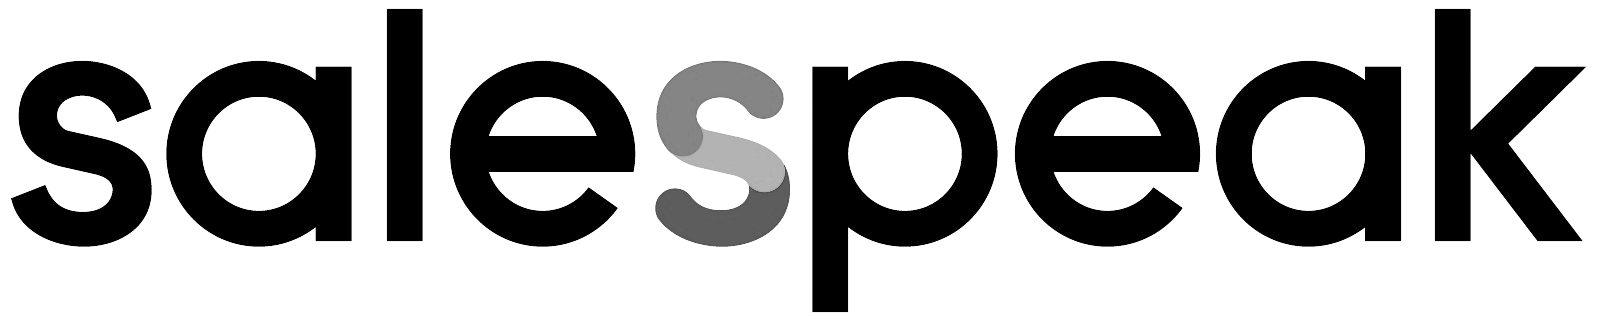 Salespeak logo